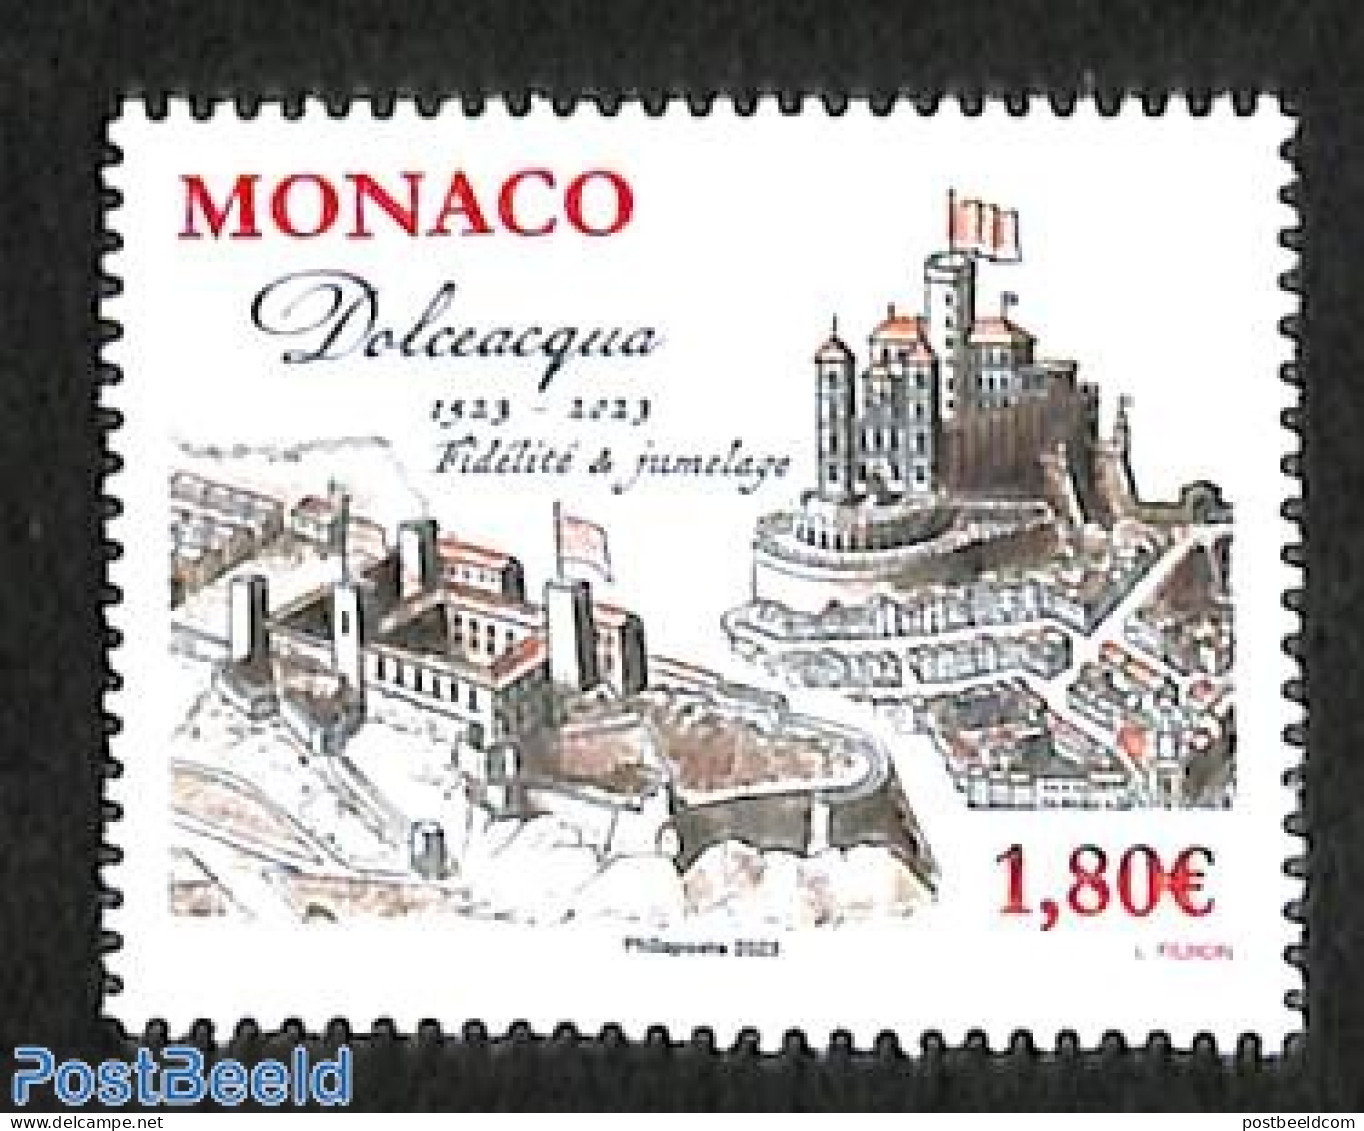 Monaco 2023 Dolceaqua 1v, Mint NH, Art - Castles & Fortifications - Ongebruikt